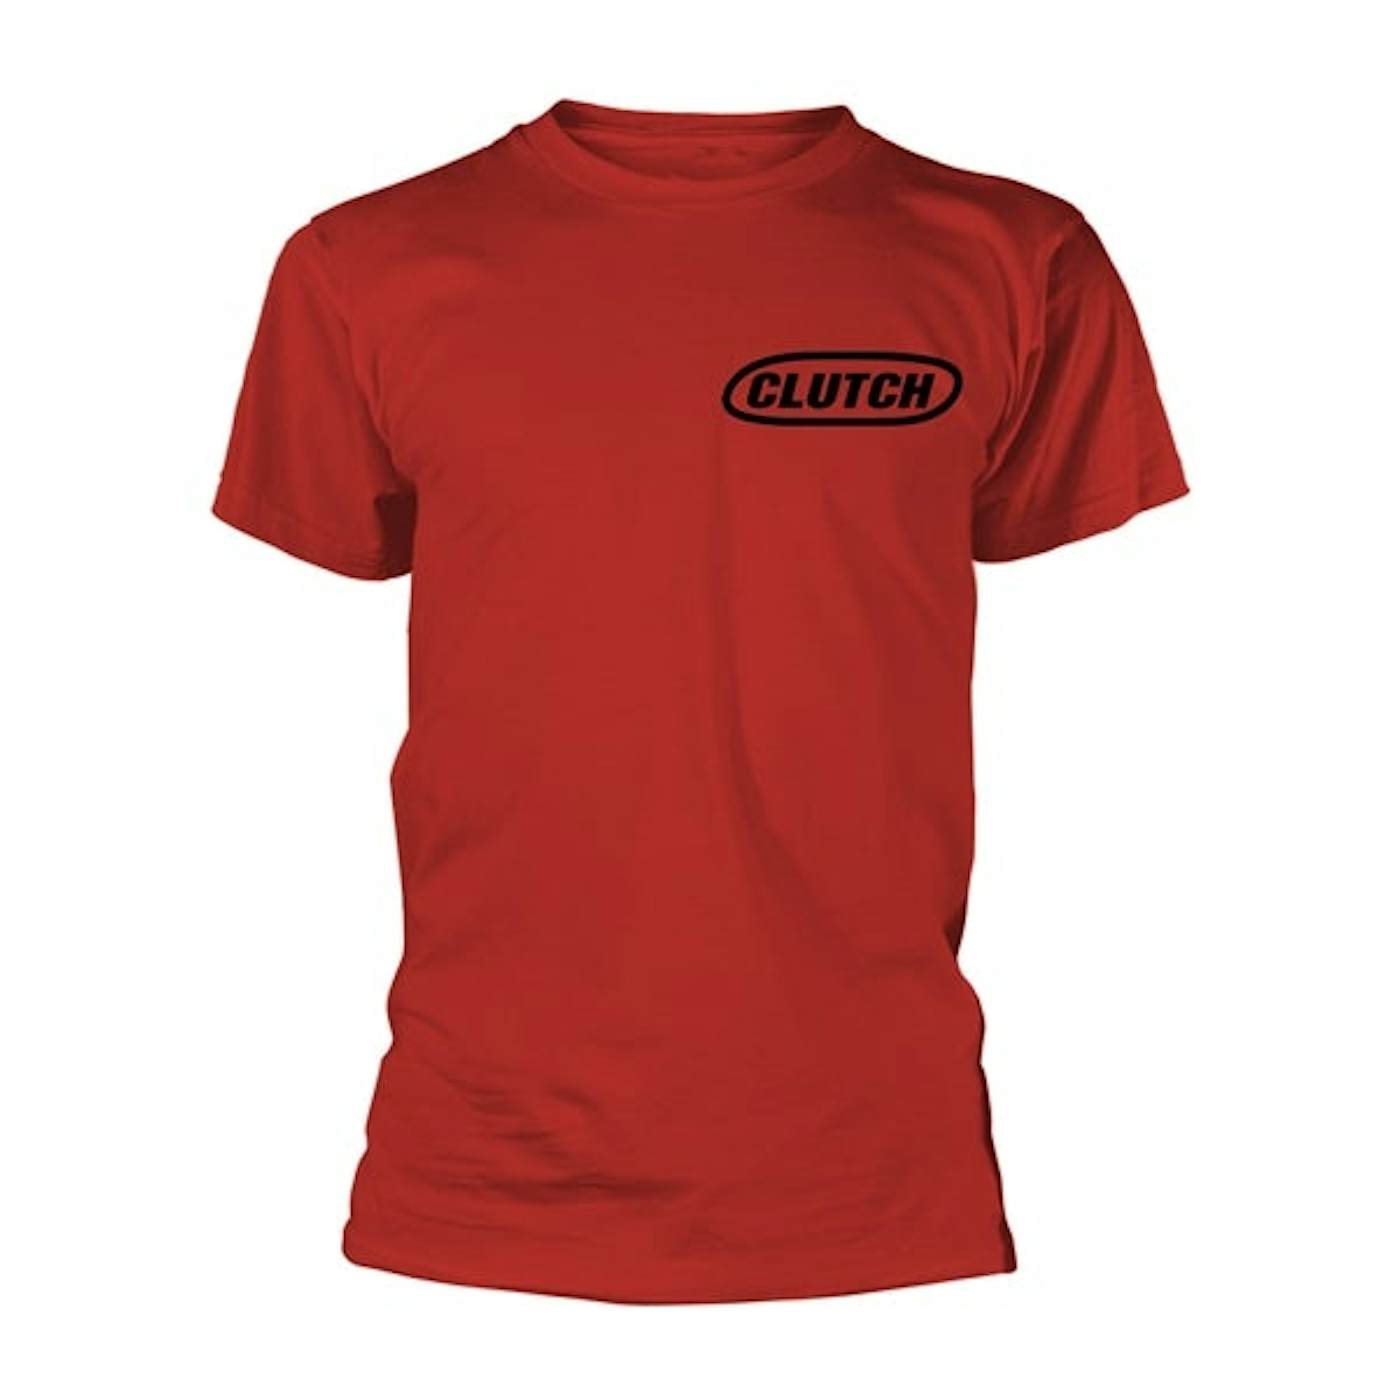 Clutch T-Shirt - Classic Logo (Black/Red)